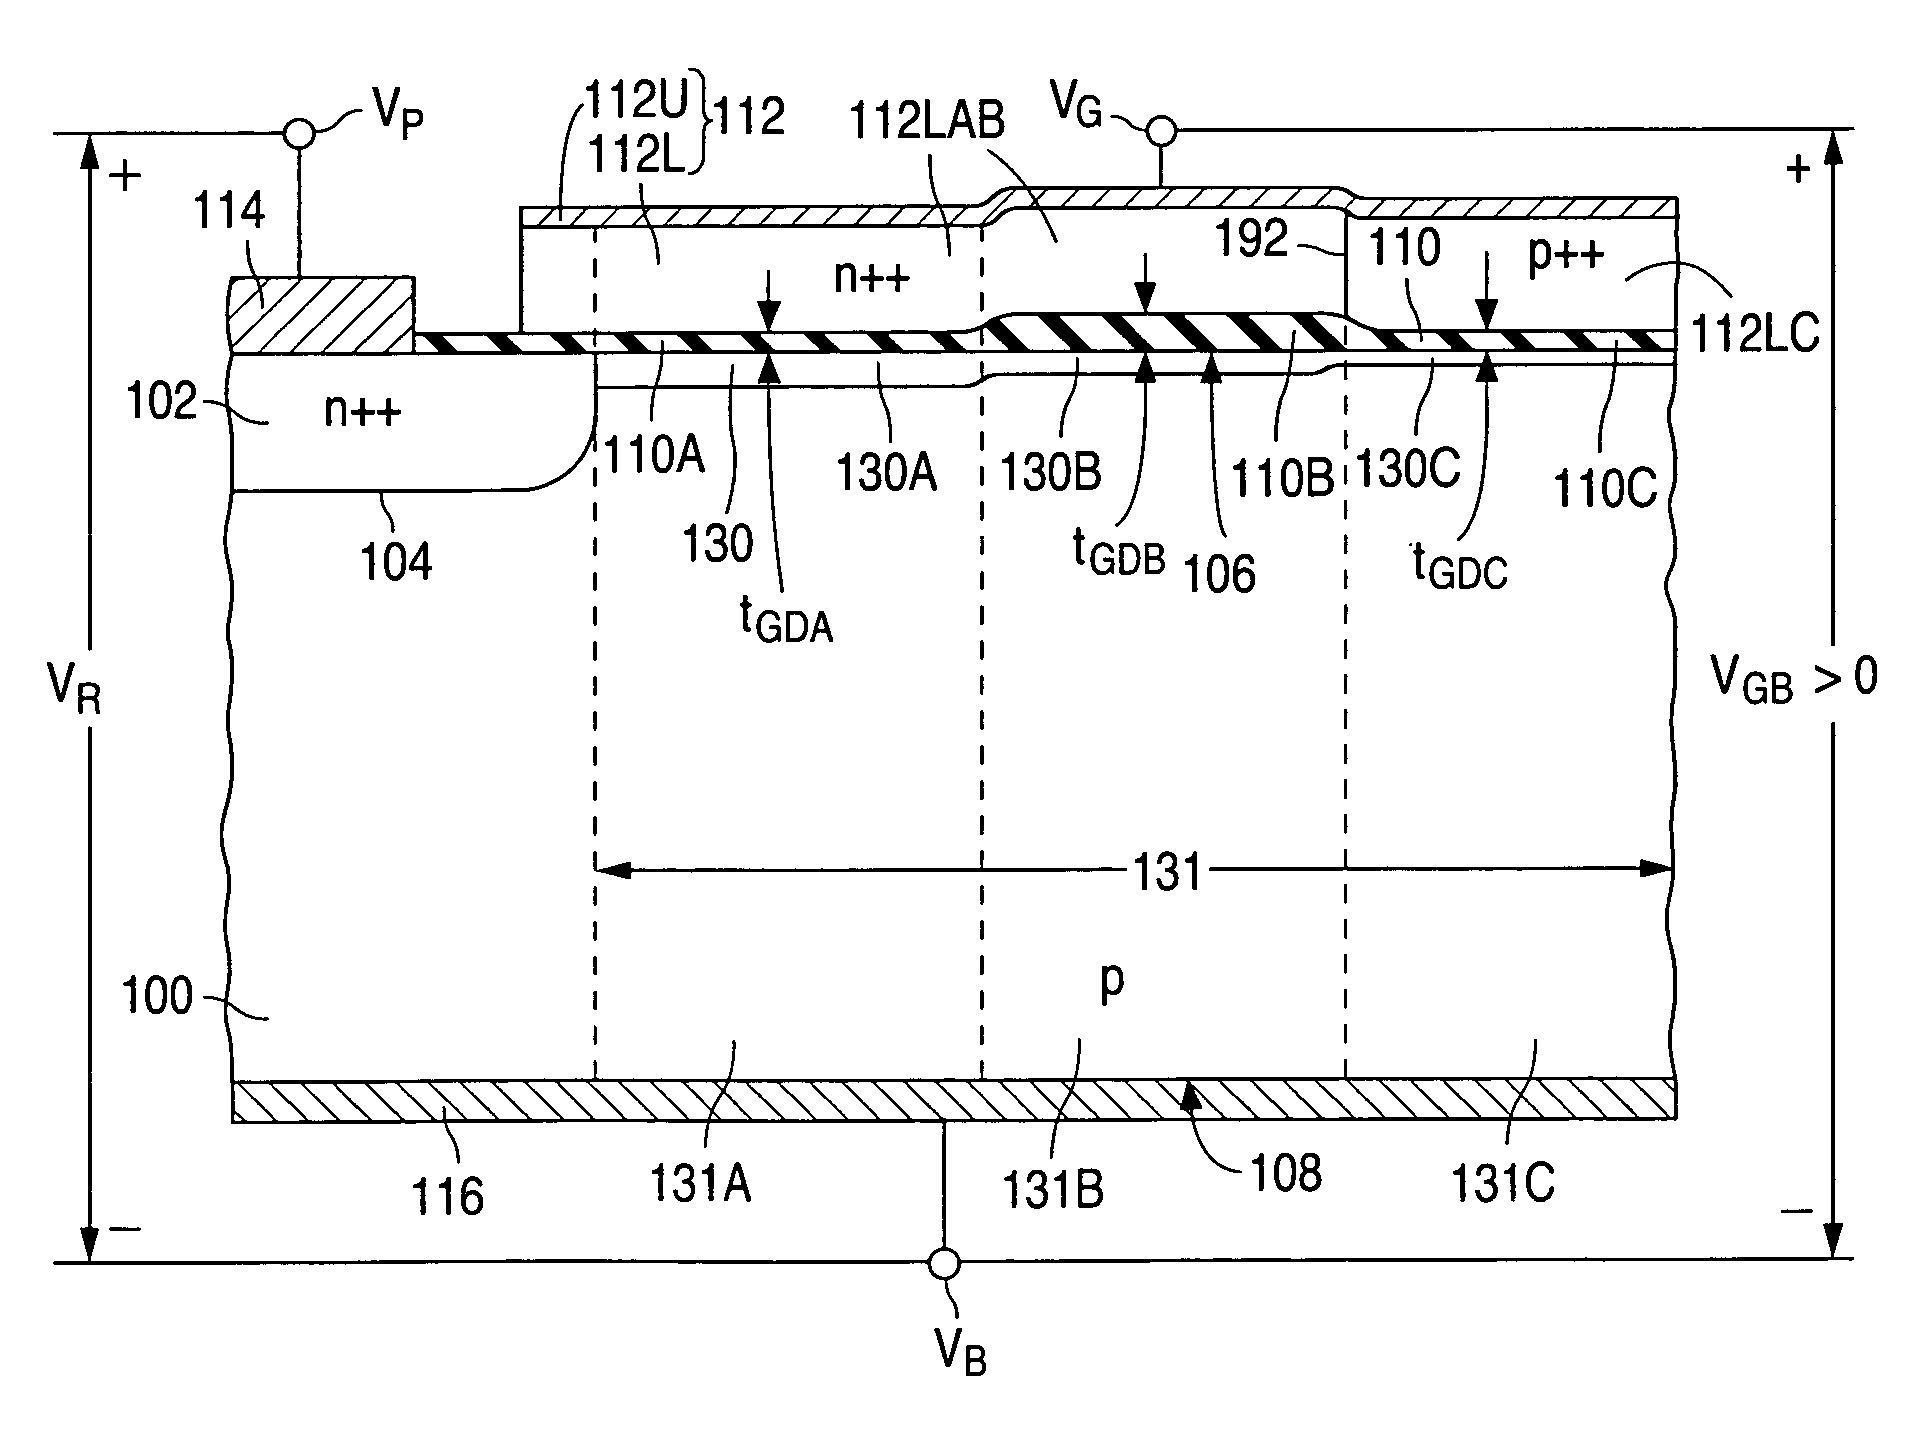 Gate-enhanced junction varactor with gradual capacitance variation